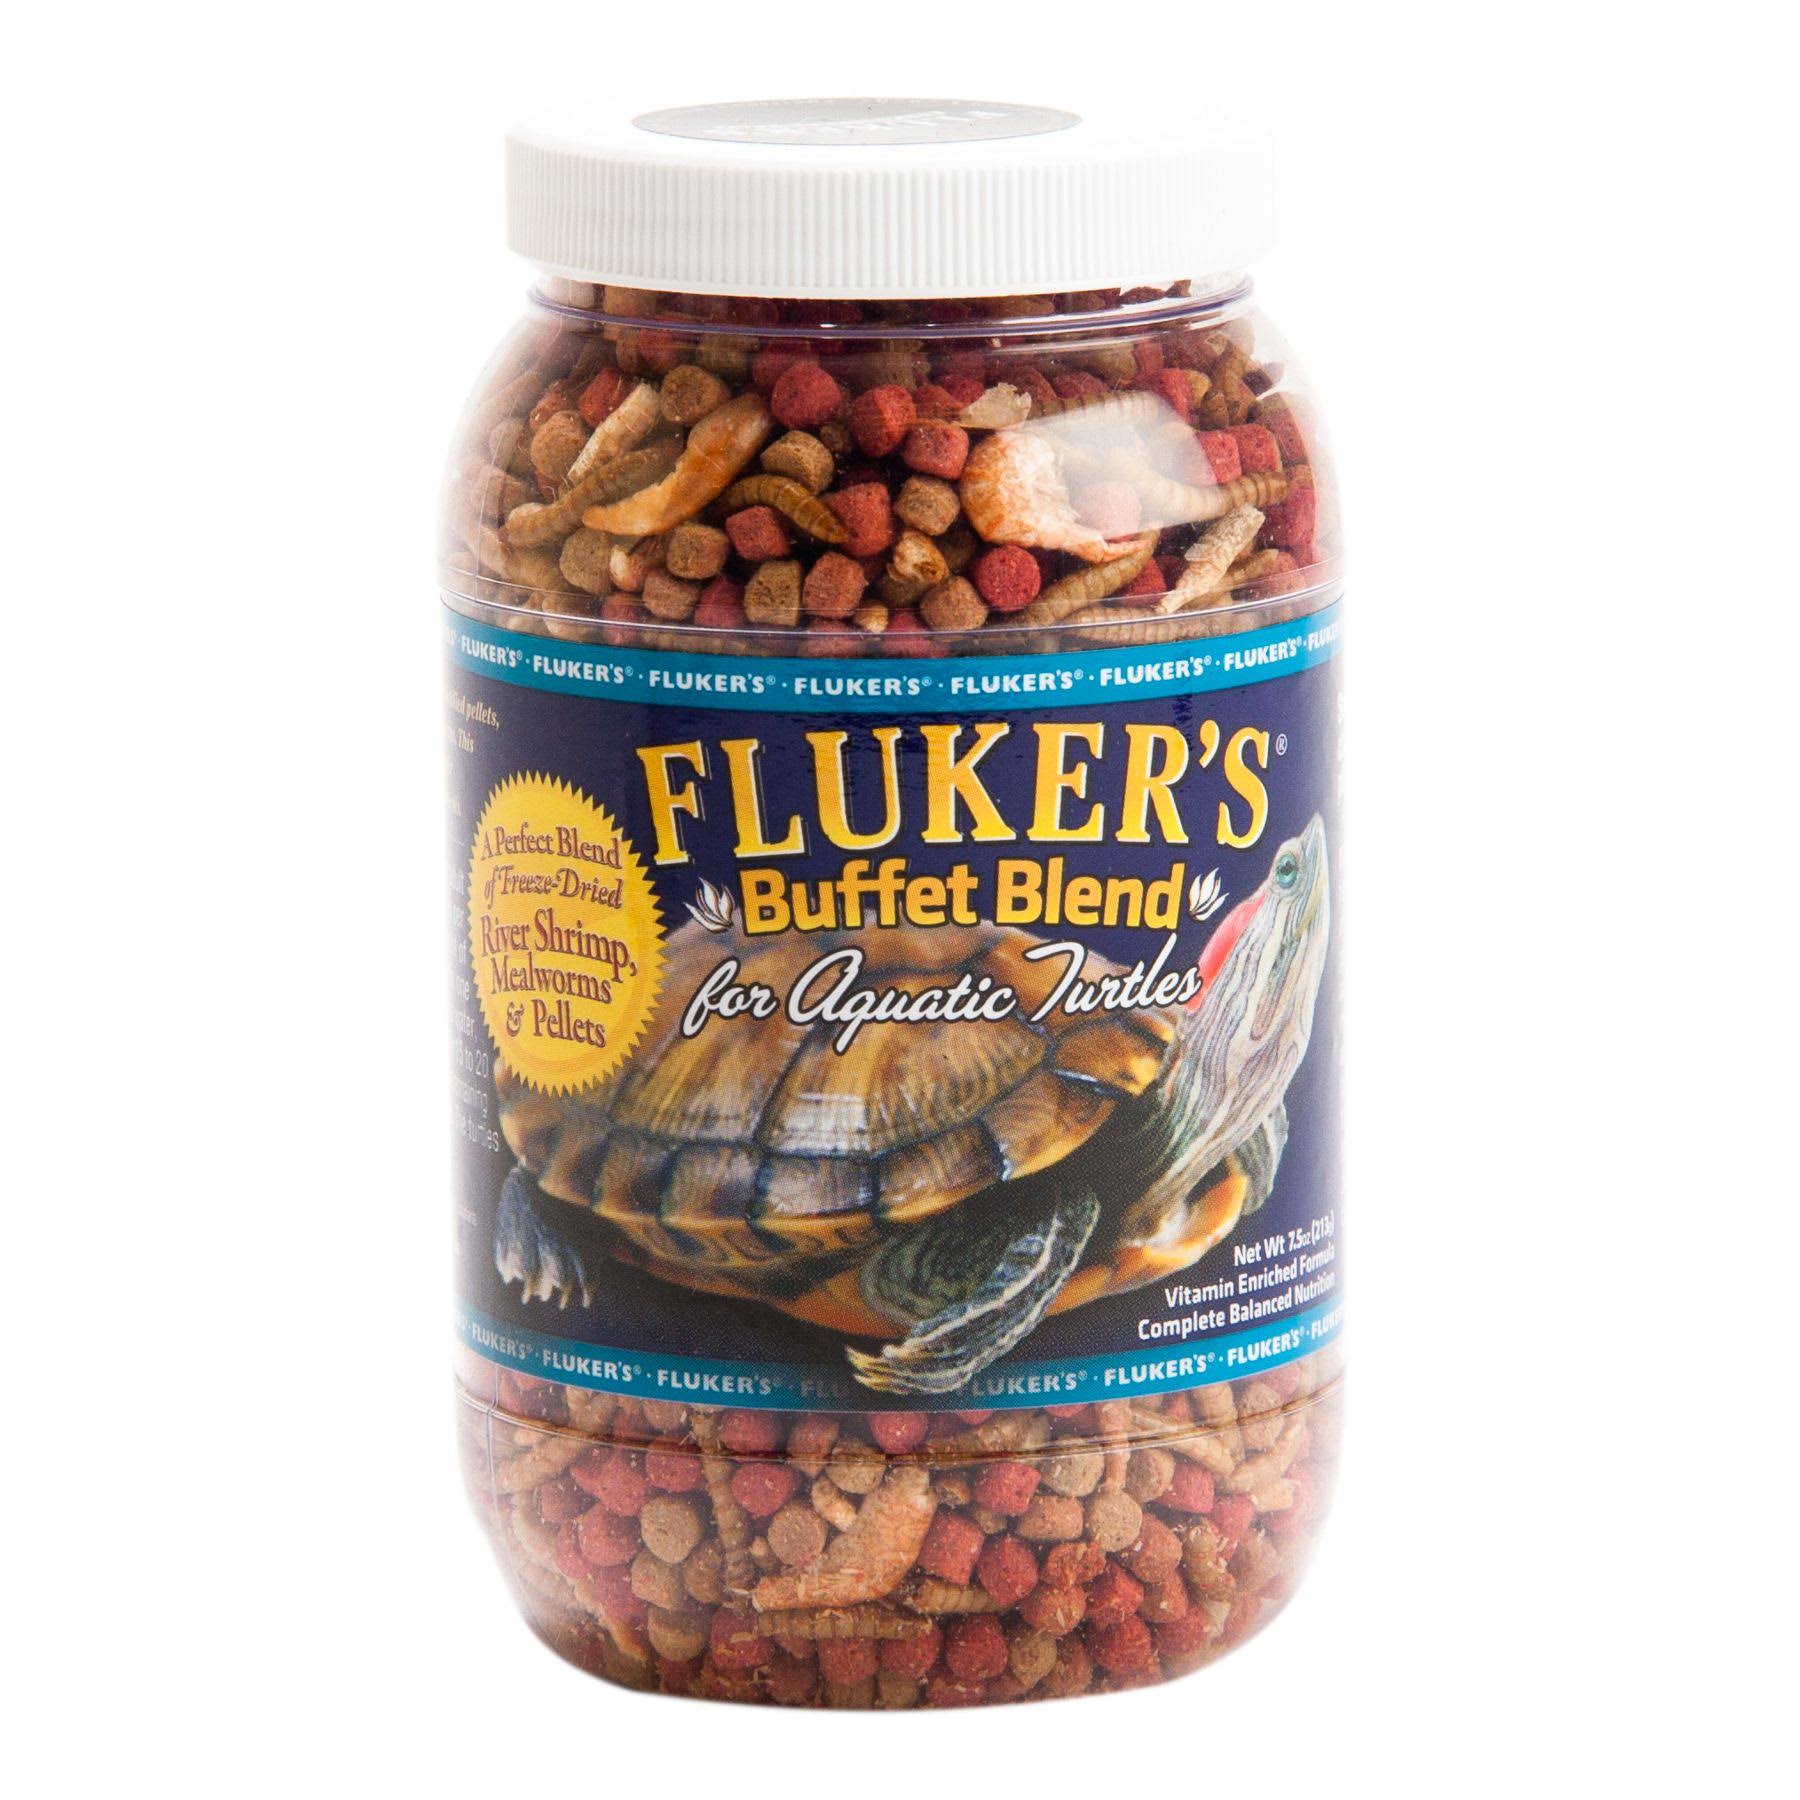 Fluker's Buffet Blend Aquatic Turtle Diet - 7.5oz